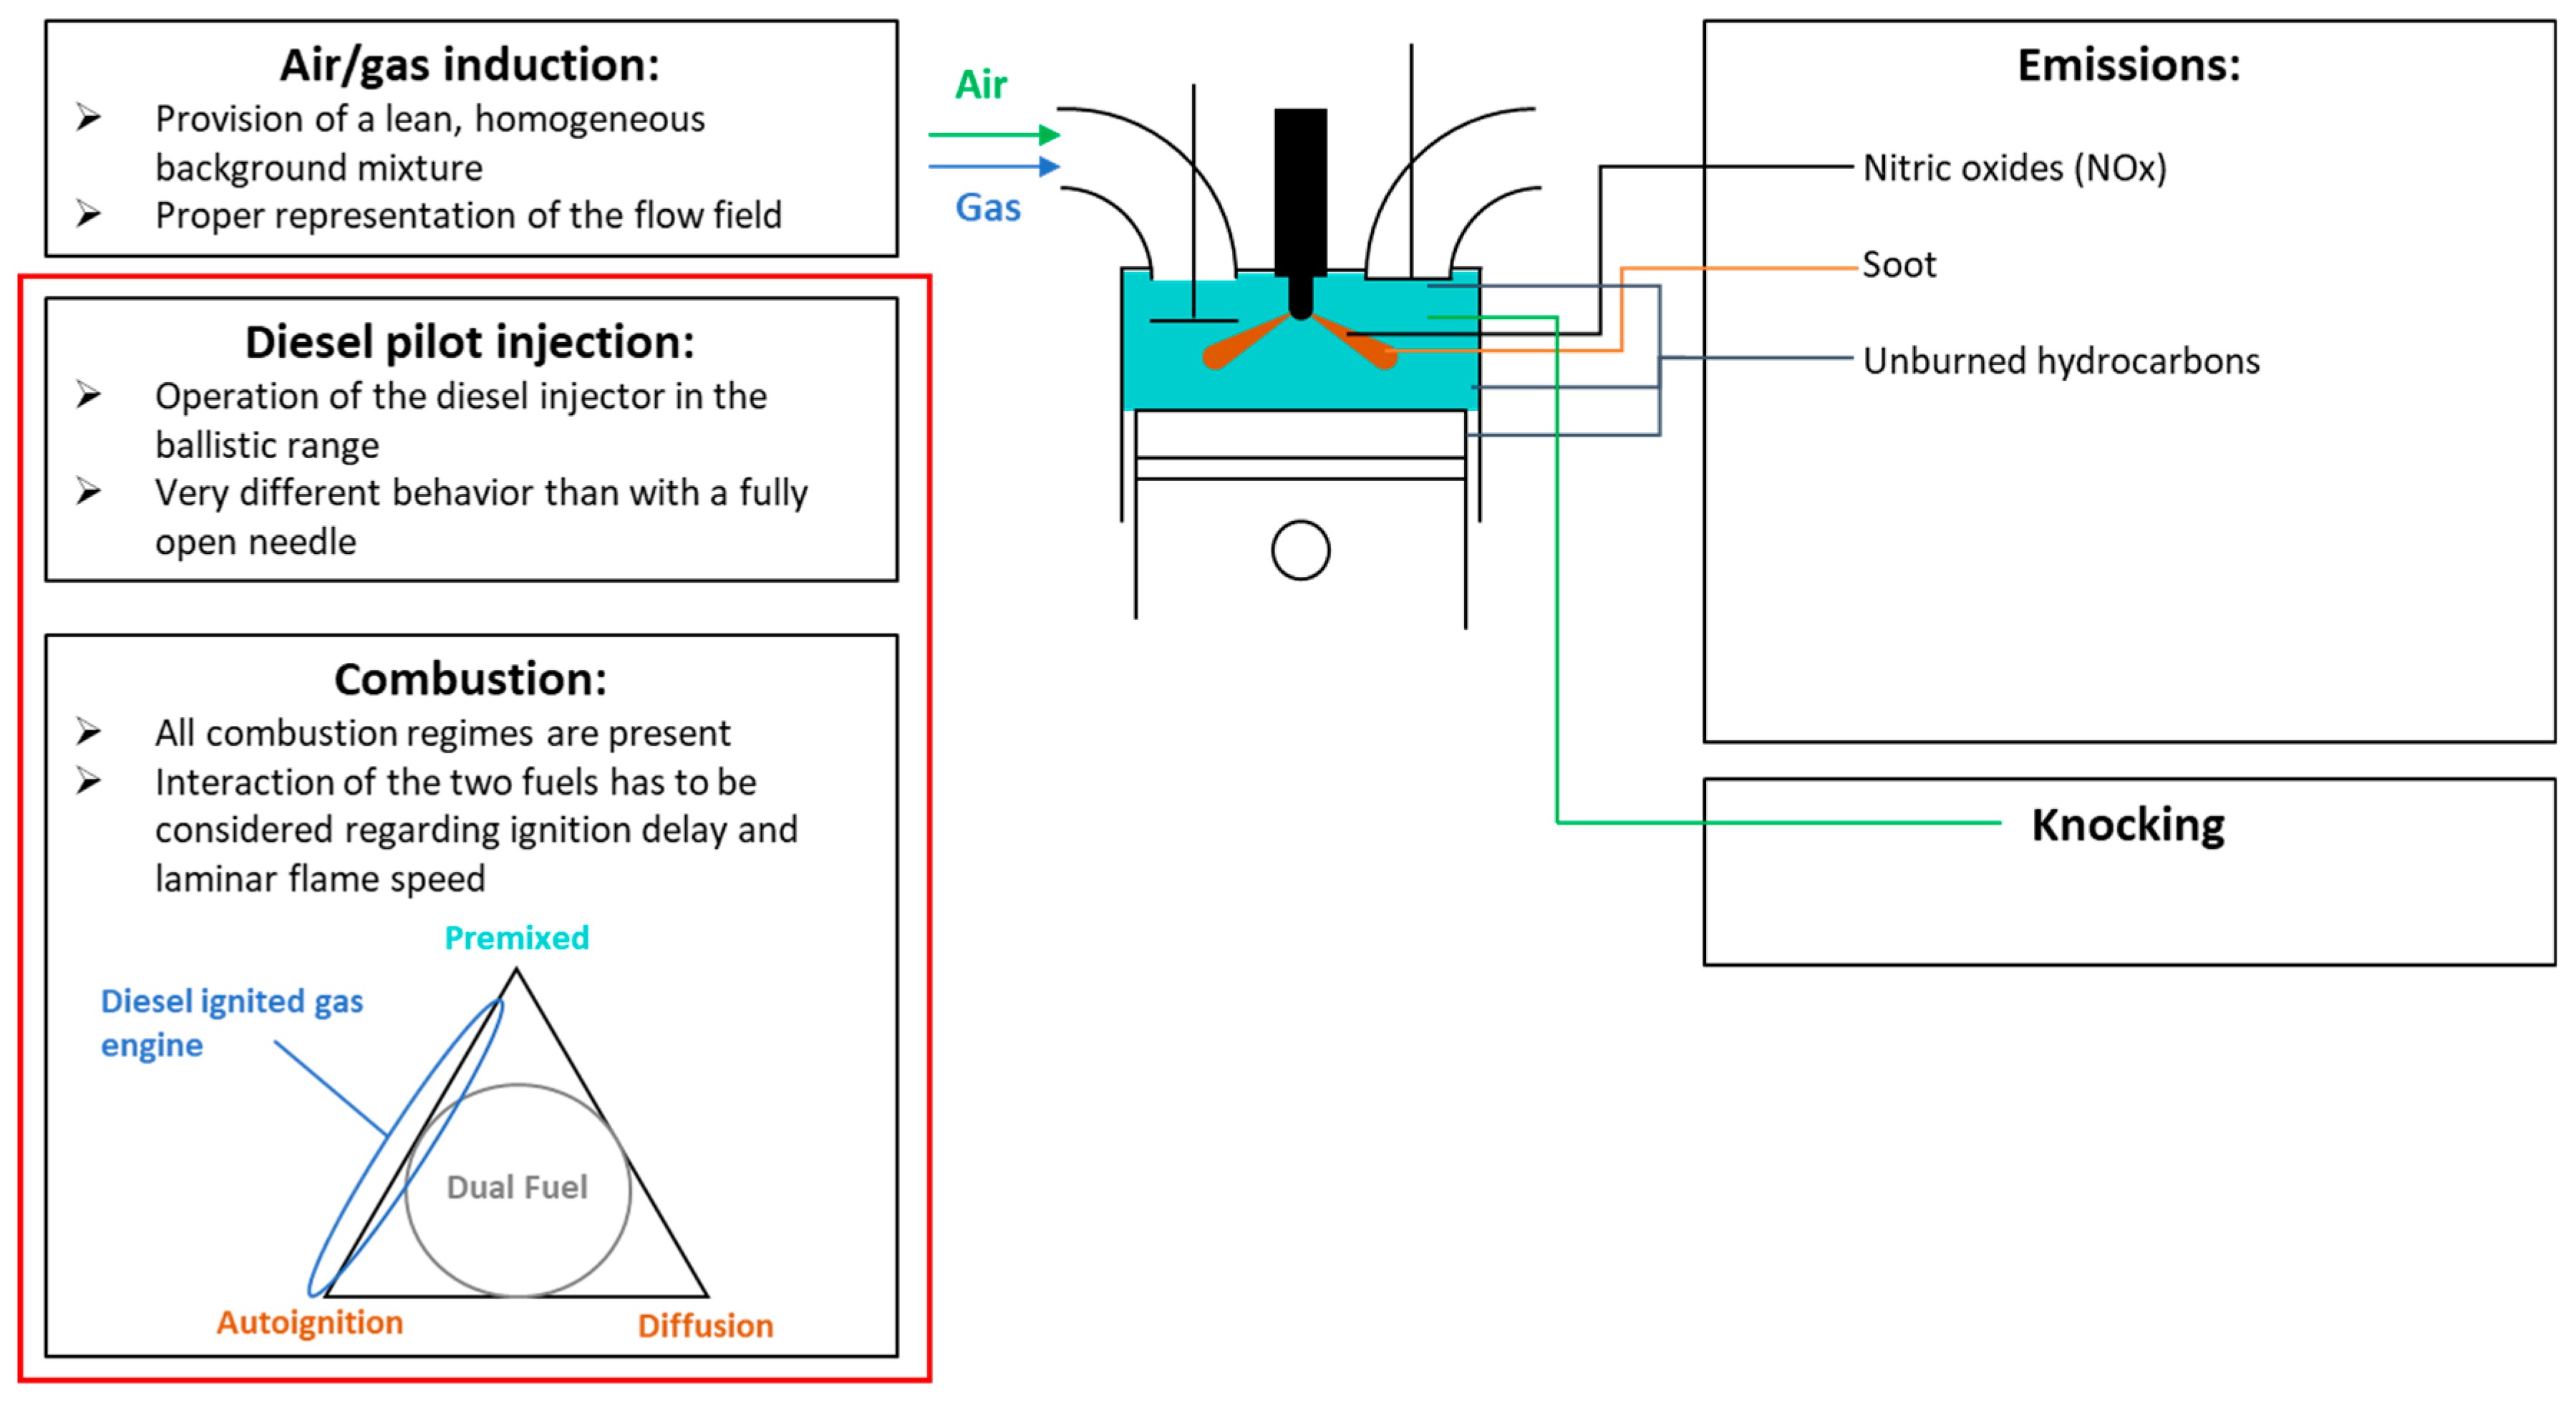 Valve Timing Diagram Of Four Stroke Diesel Engine Energies Free Full Text Of Valve Timing Diagram Of Four Stroke Diesel Engine